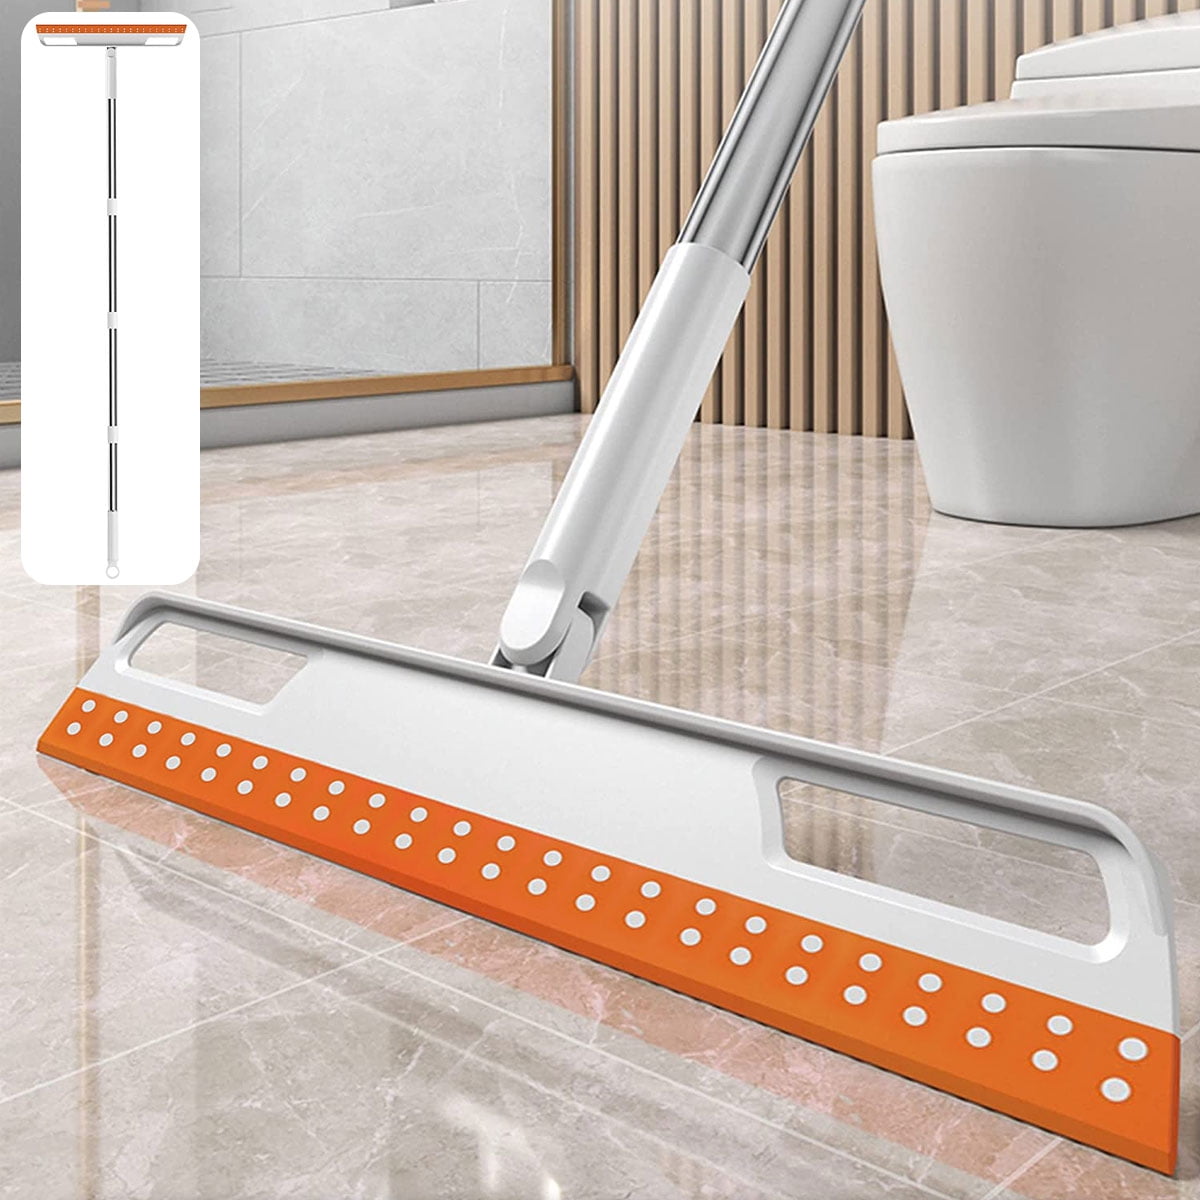 Bathroom Floor Cleaning Brush, Cleaning Brush Joints Floor